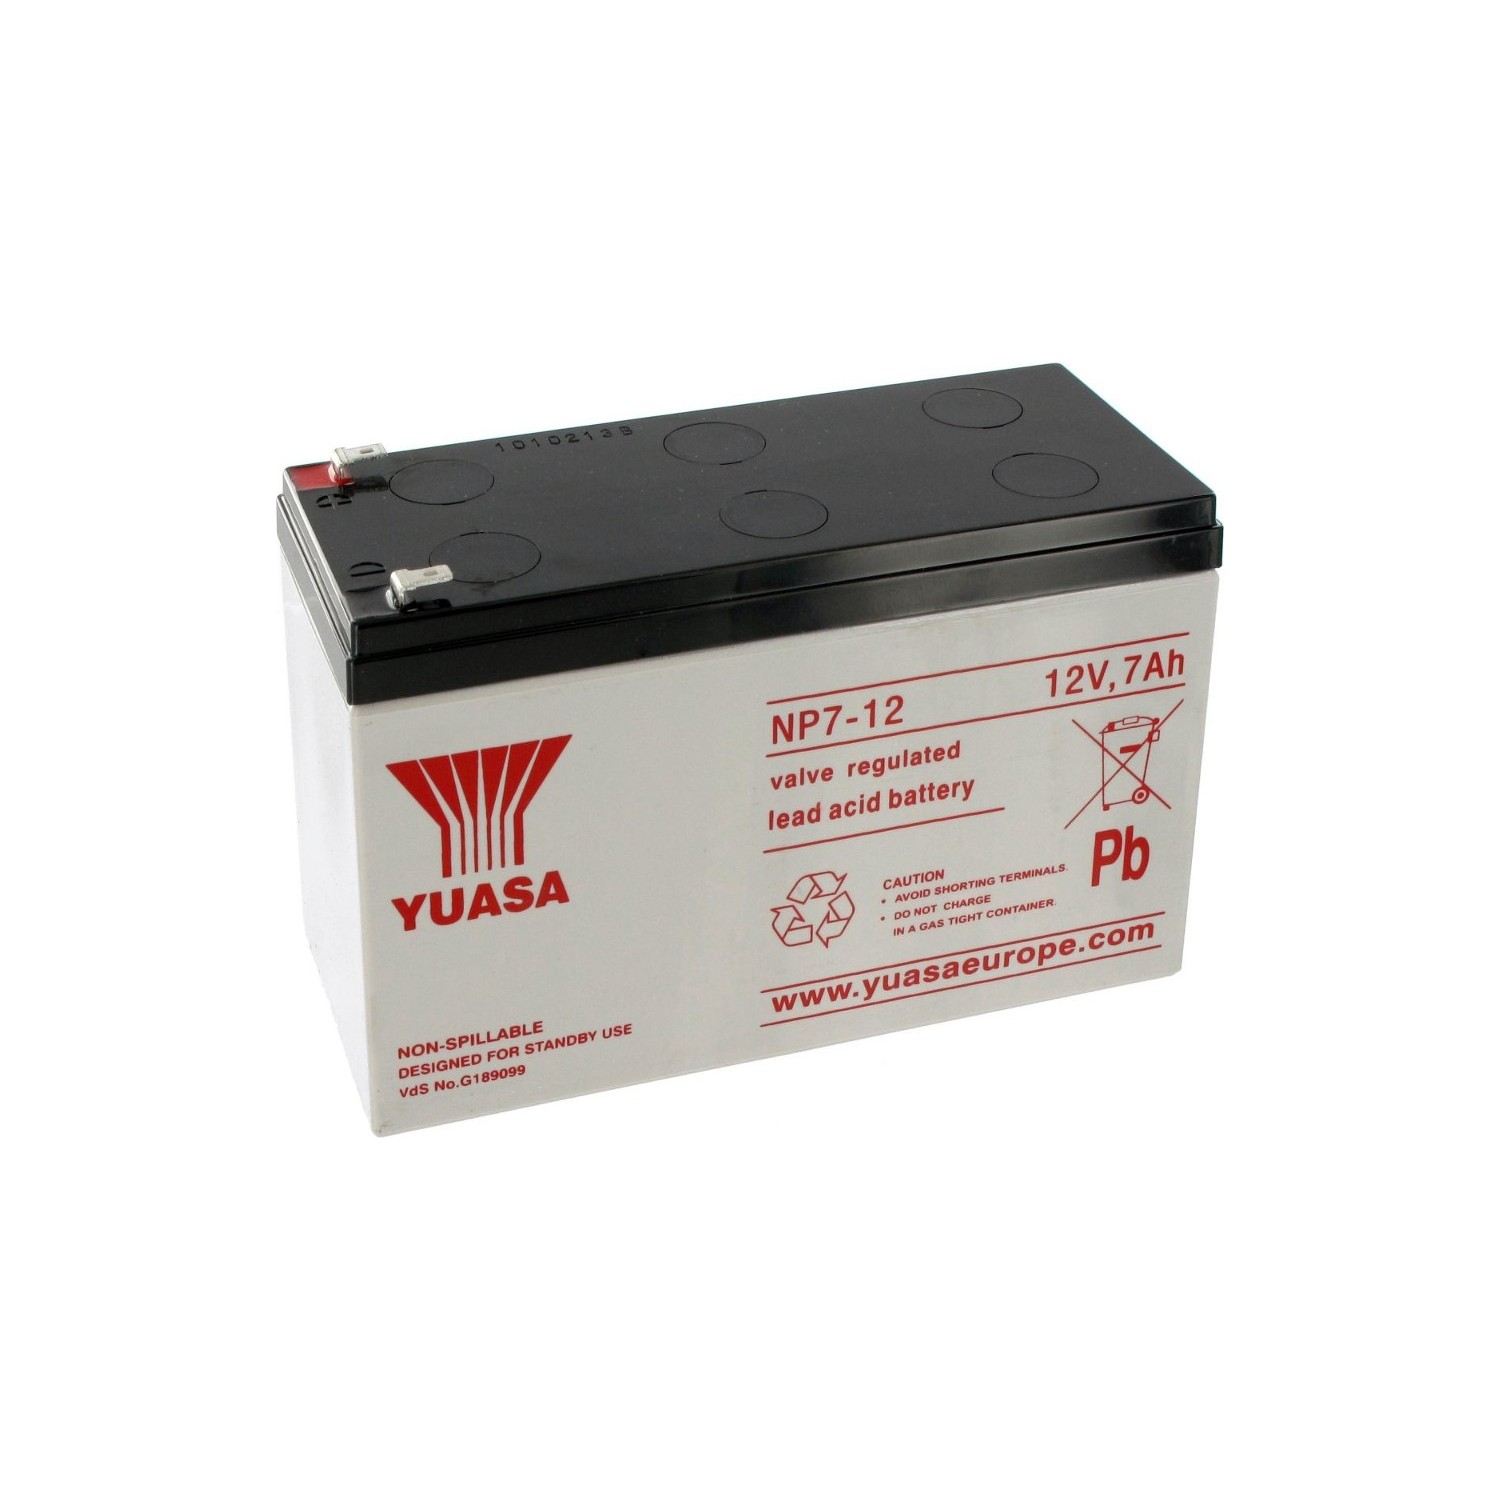 Battery 12v 7ah. Аккумулятор Yuasa np7-12 (12v / 7ah). Yuasa npw36-12 12v 36w/Cell 10min. Аккумуляторная батарея Yuasa rew45-12 12v/9ah (#rew45-12). Yuasa npw36-12.